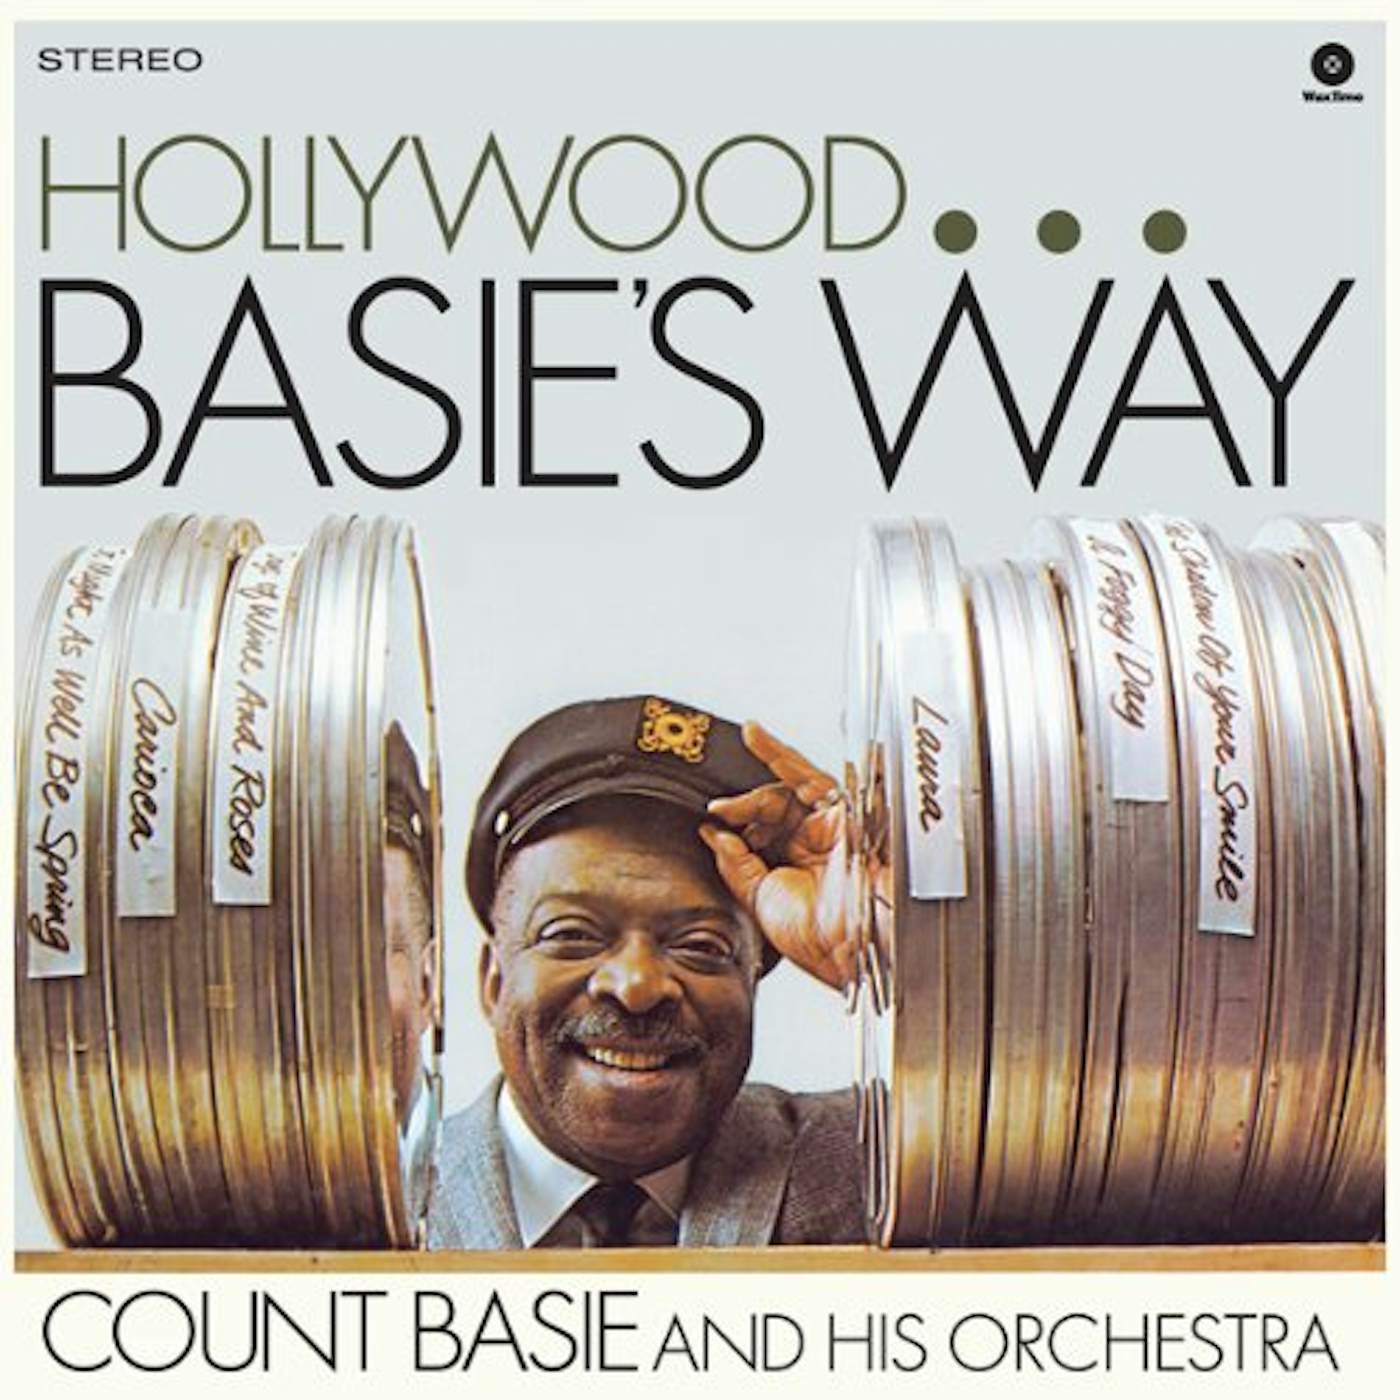 Count Basie HOLLYWOOD BASIE'S WAY Vinyl Record - Spain Release